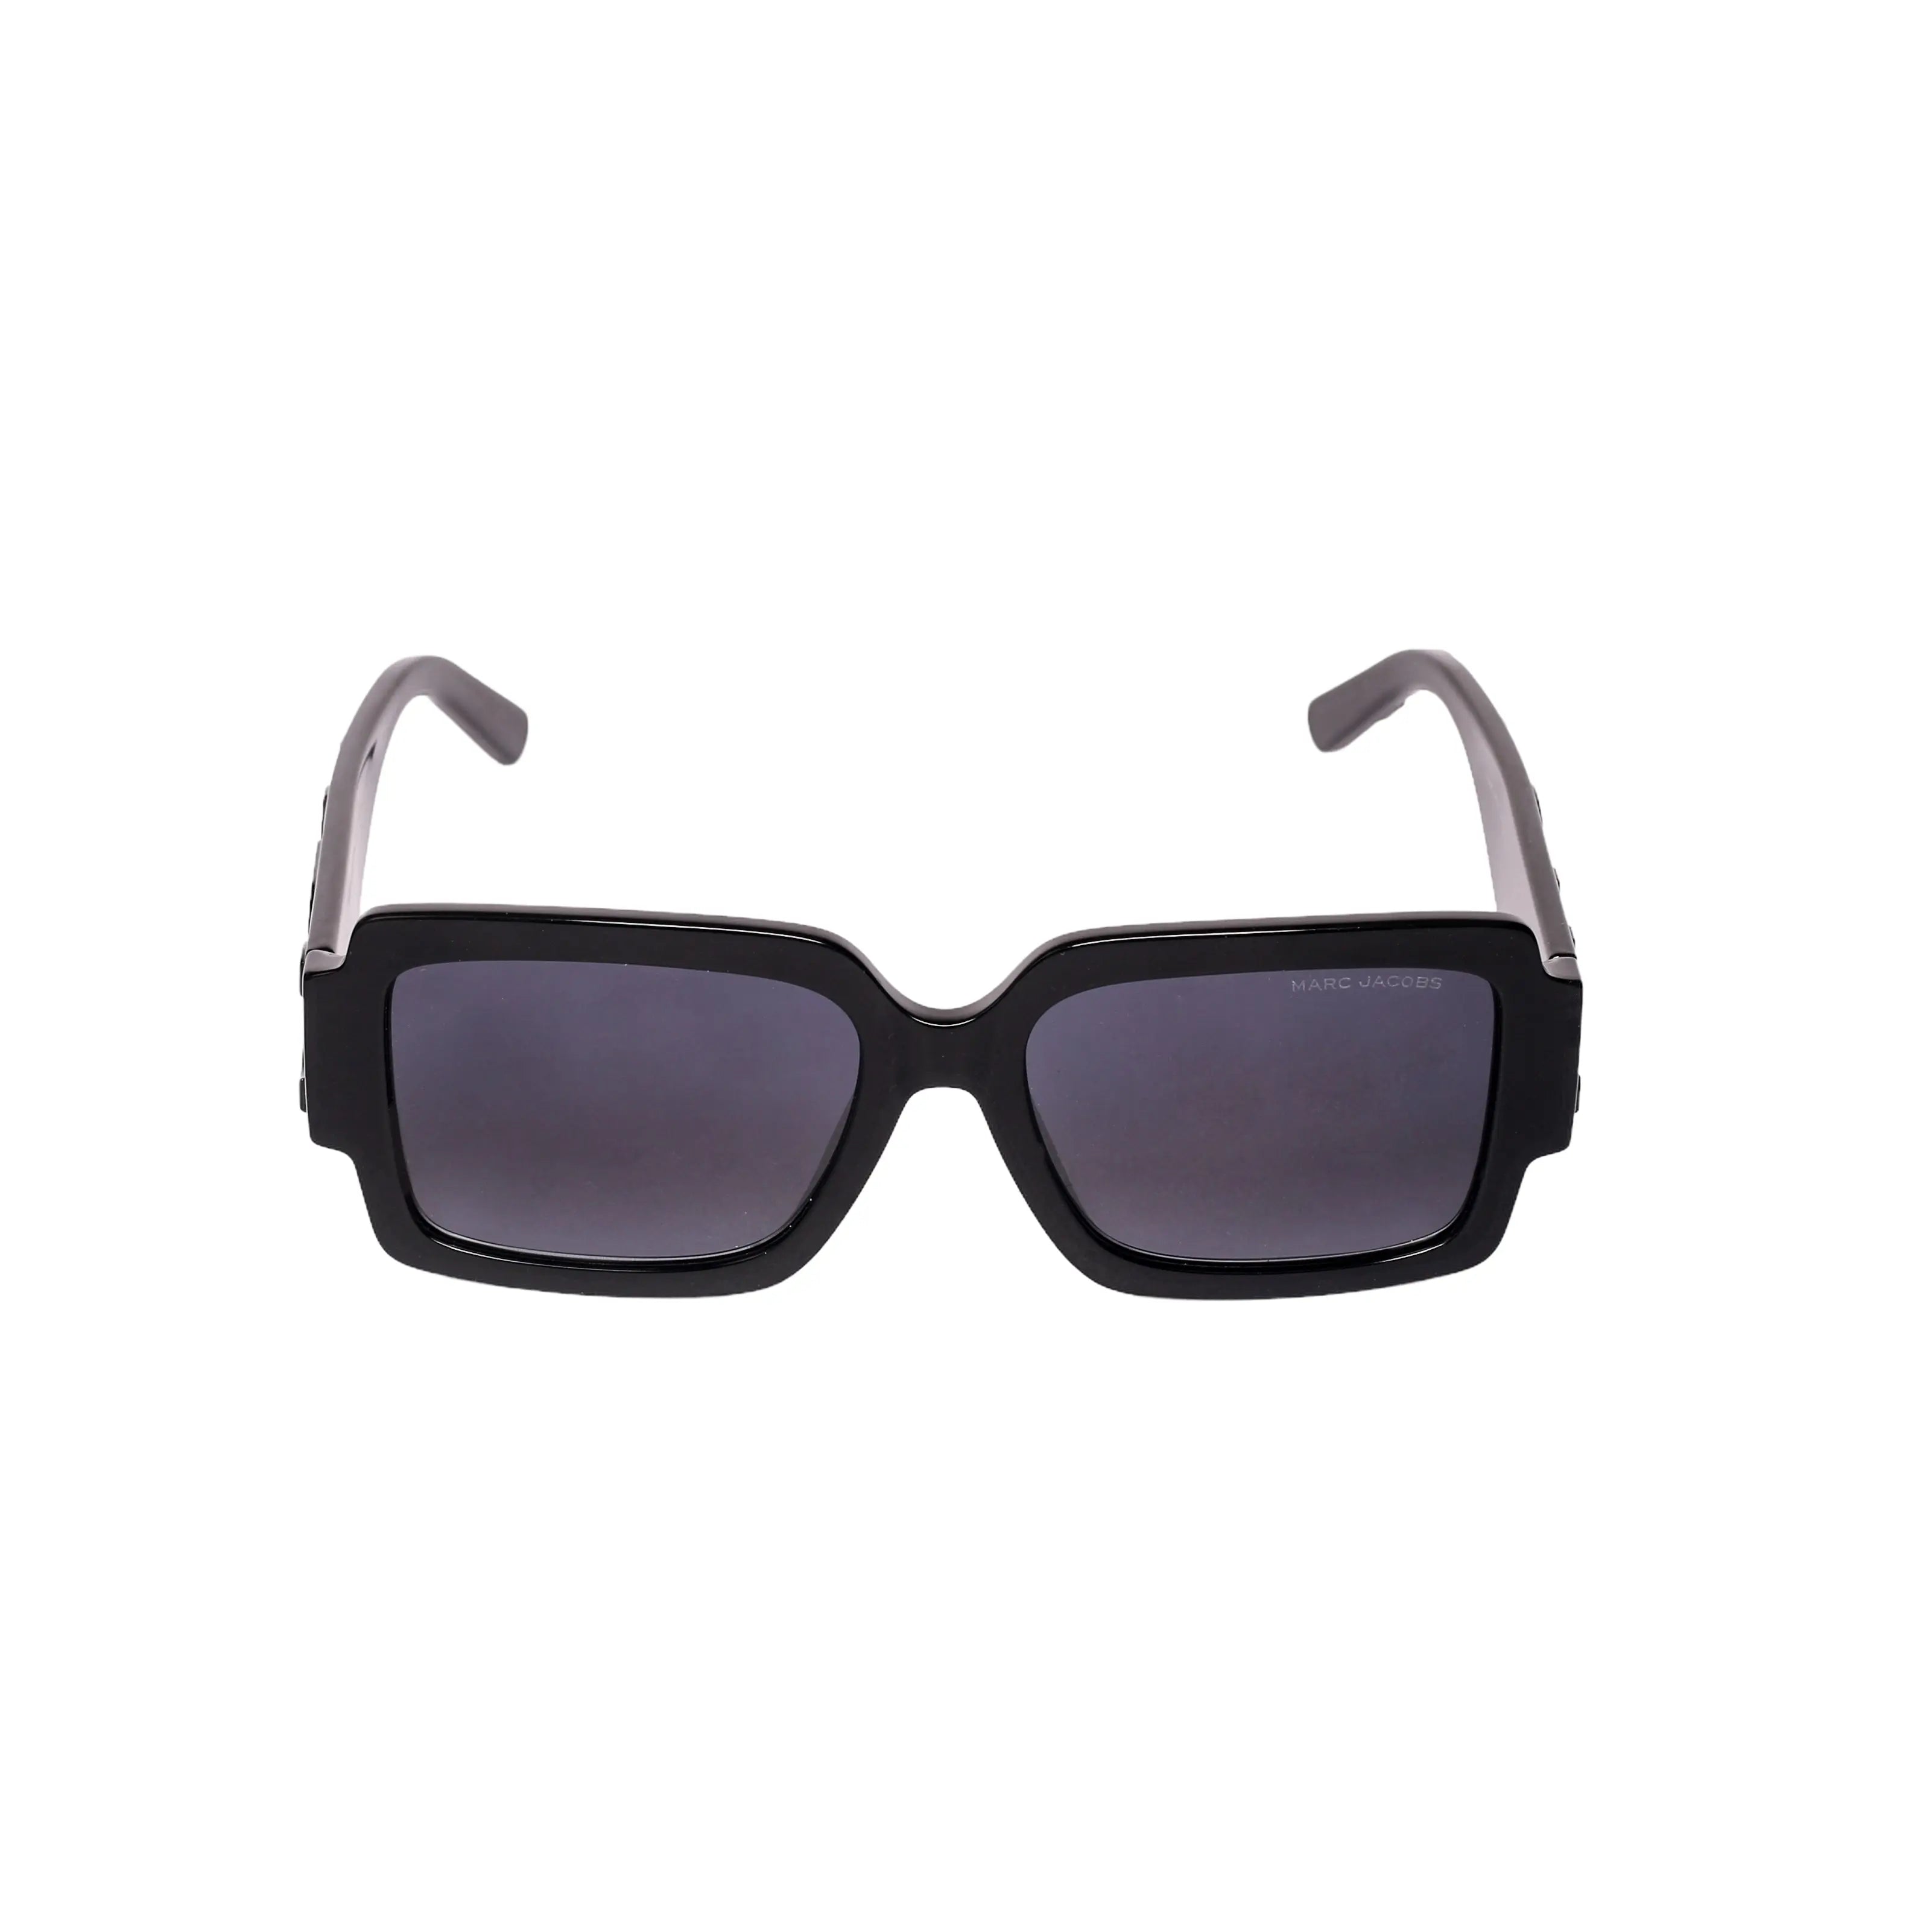 Marc Jacob-MARC 693/S-55-08A-9 Sunglasses - Premium Sunglasses from Marc Jacob - Just Rs. 11900! Shop now at Laxmi Opticians